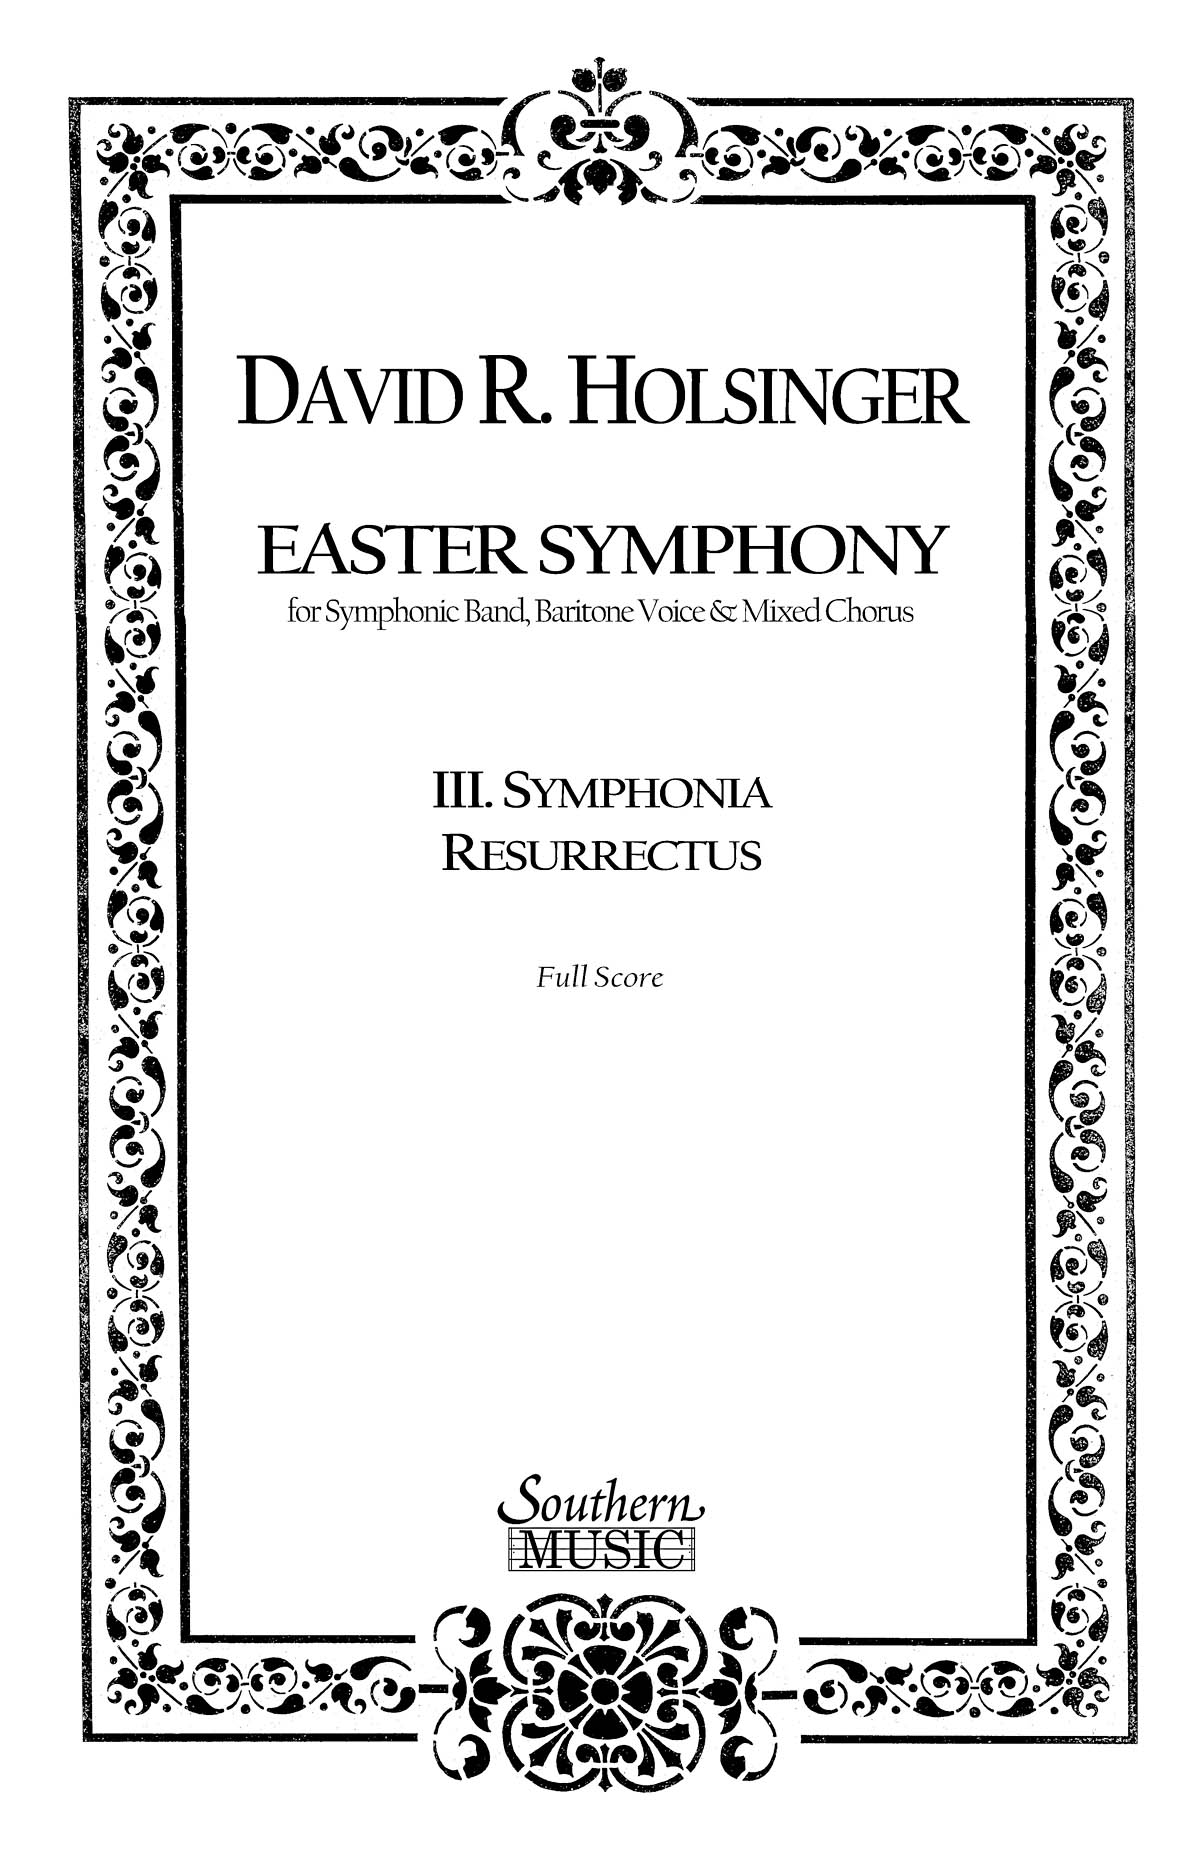 David R. Holsinger: Symphonia Resurrectus Mvt 3 From Easter Symphony: Concert